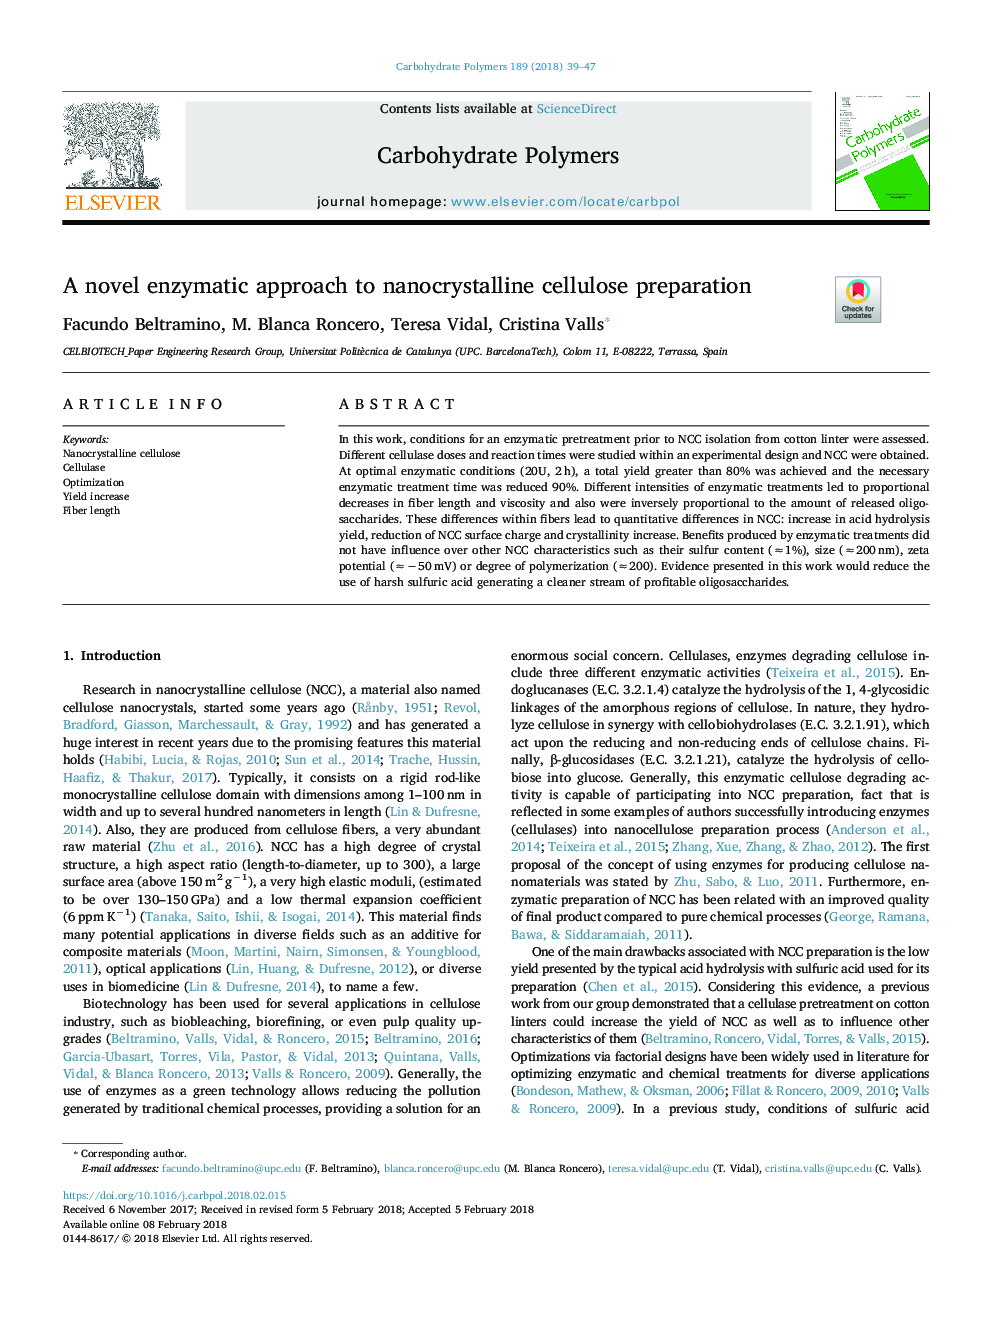 A novel enzymatic approach to nanocrystalline cellulose preparation